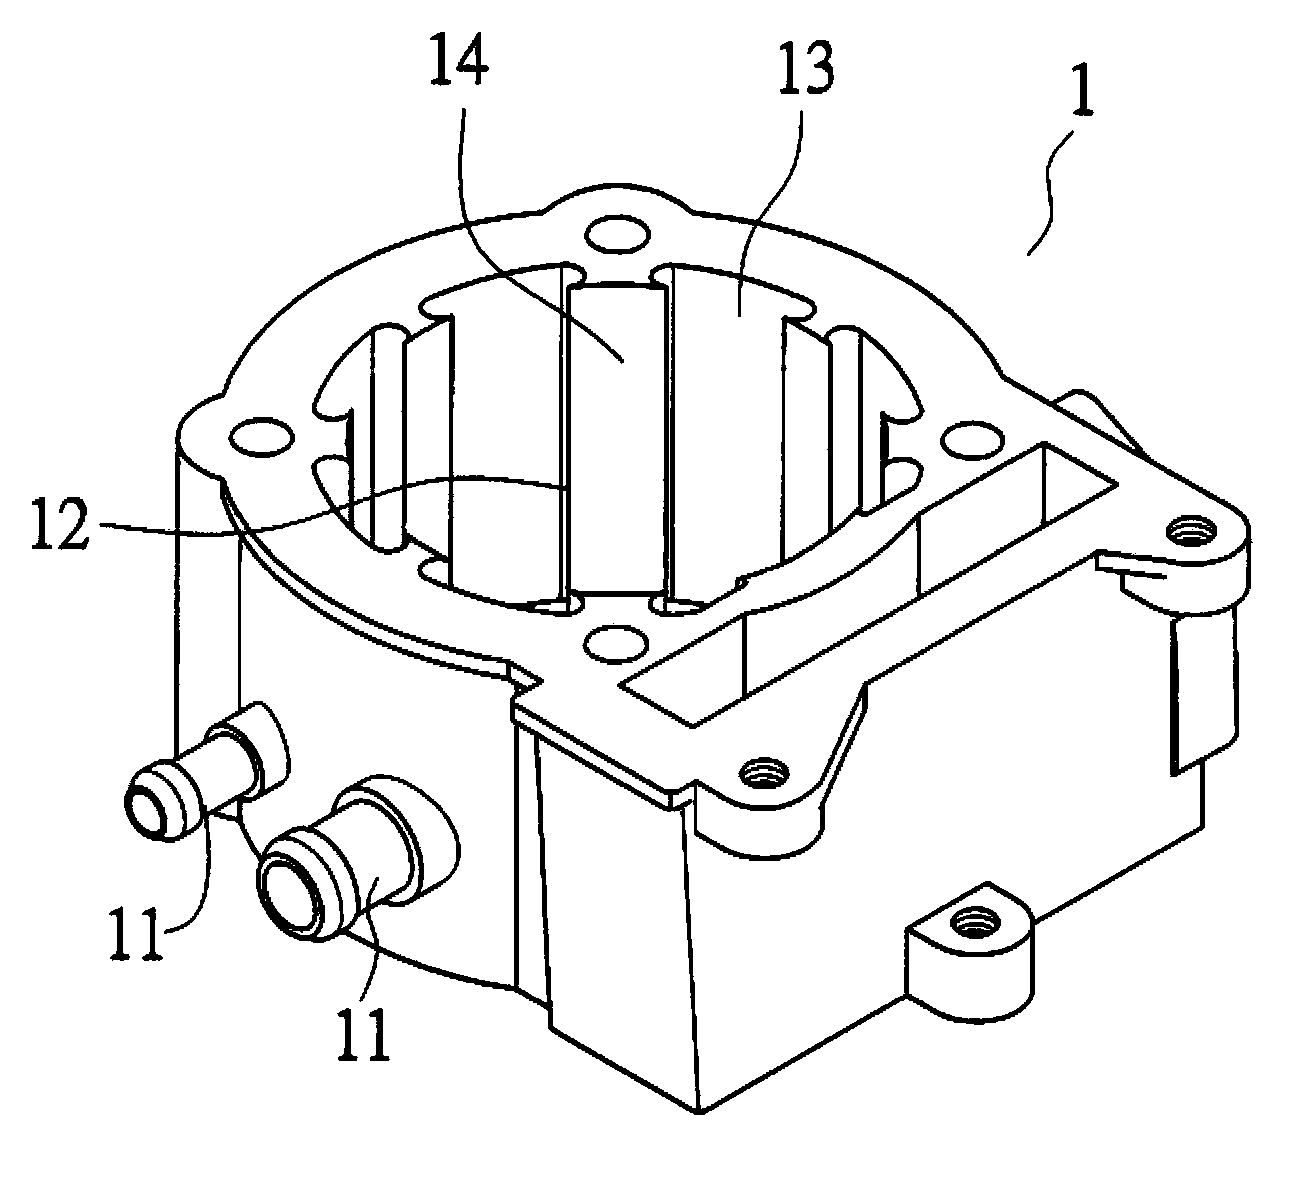 Method for manufacturing water-cooled locomotive cylinder